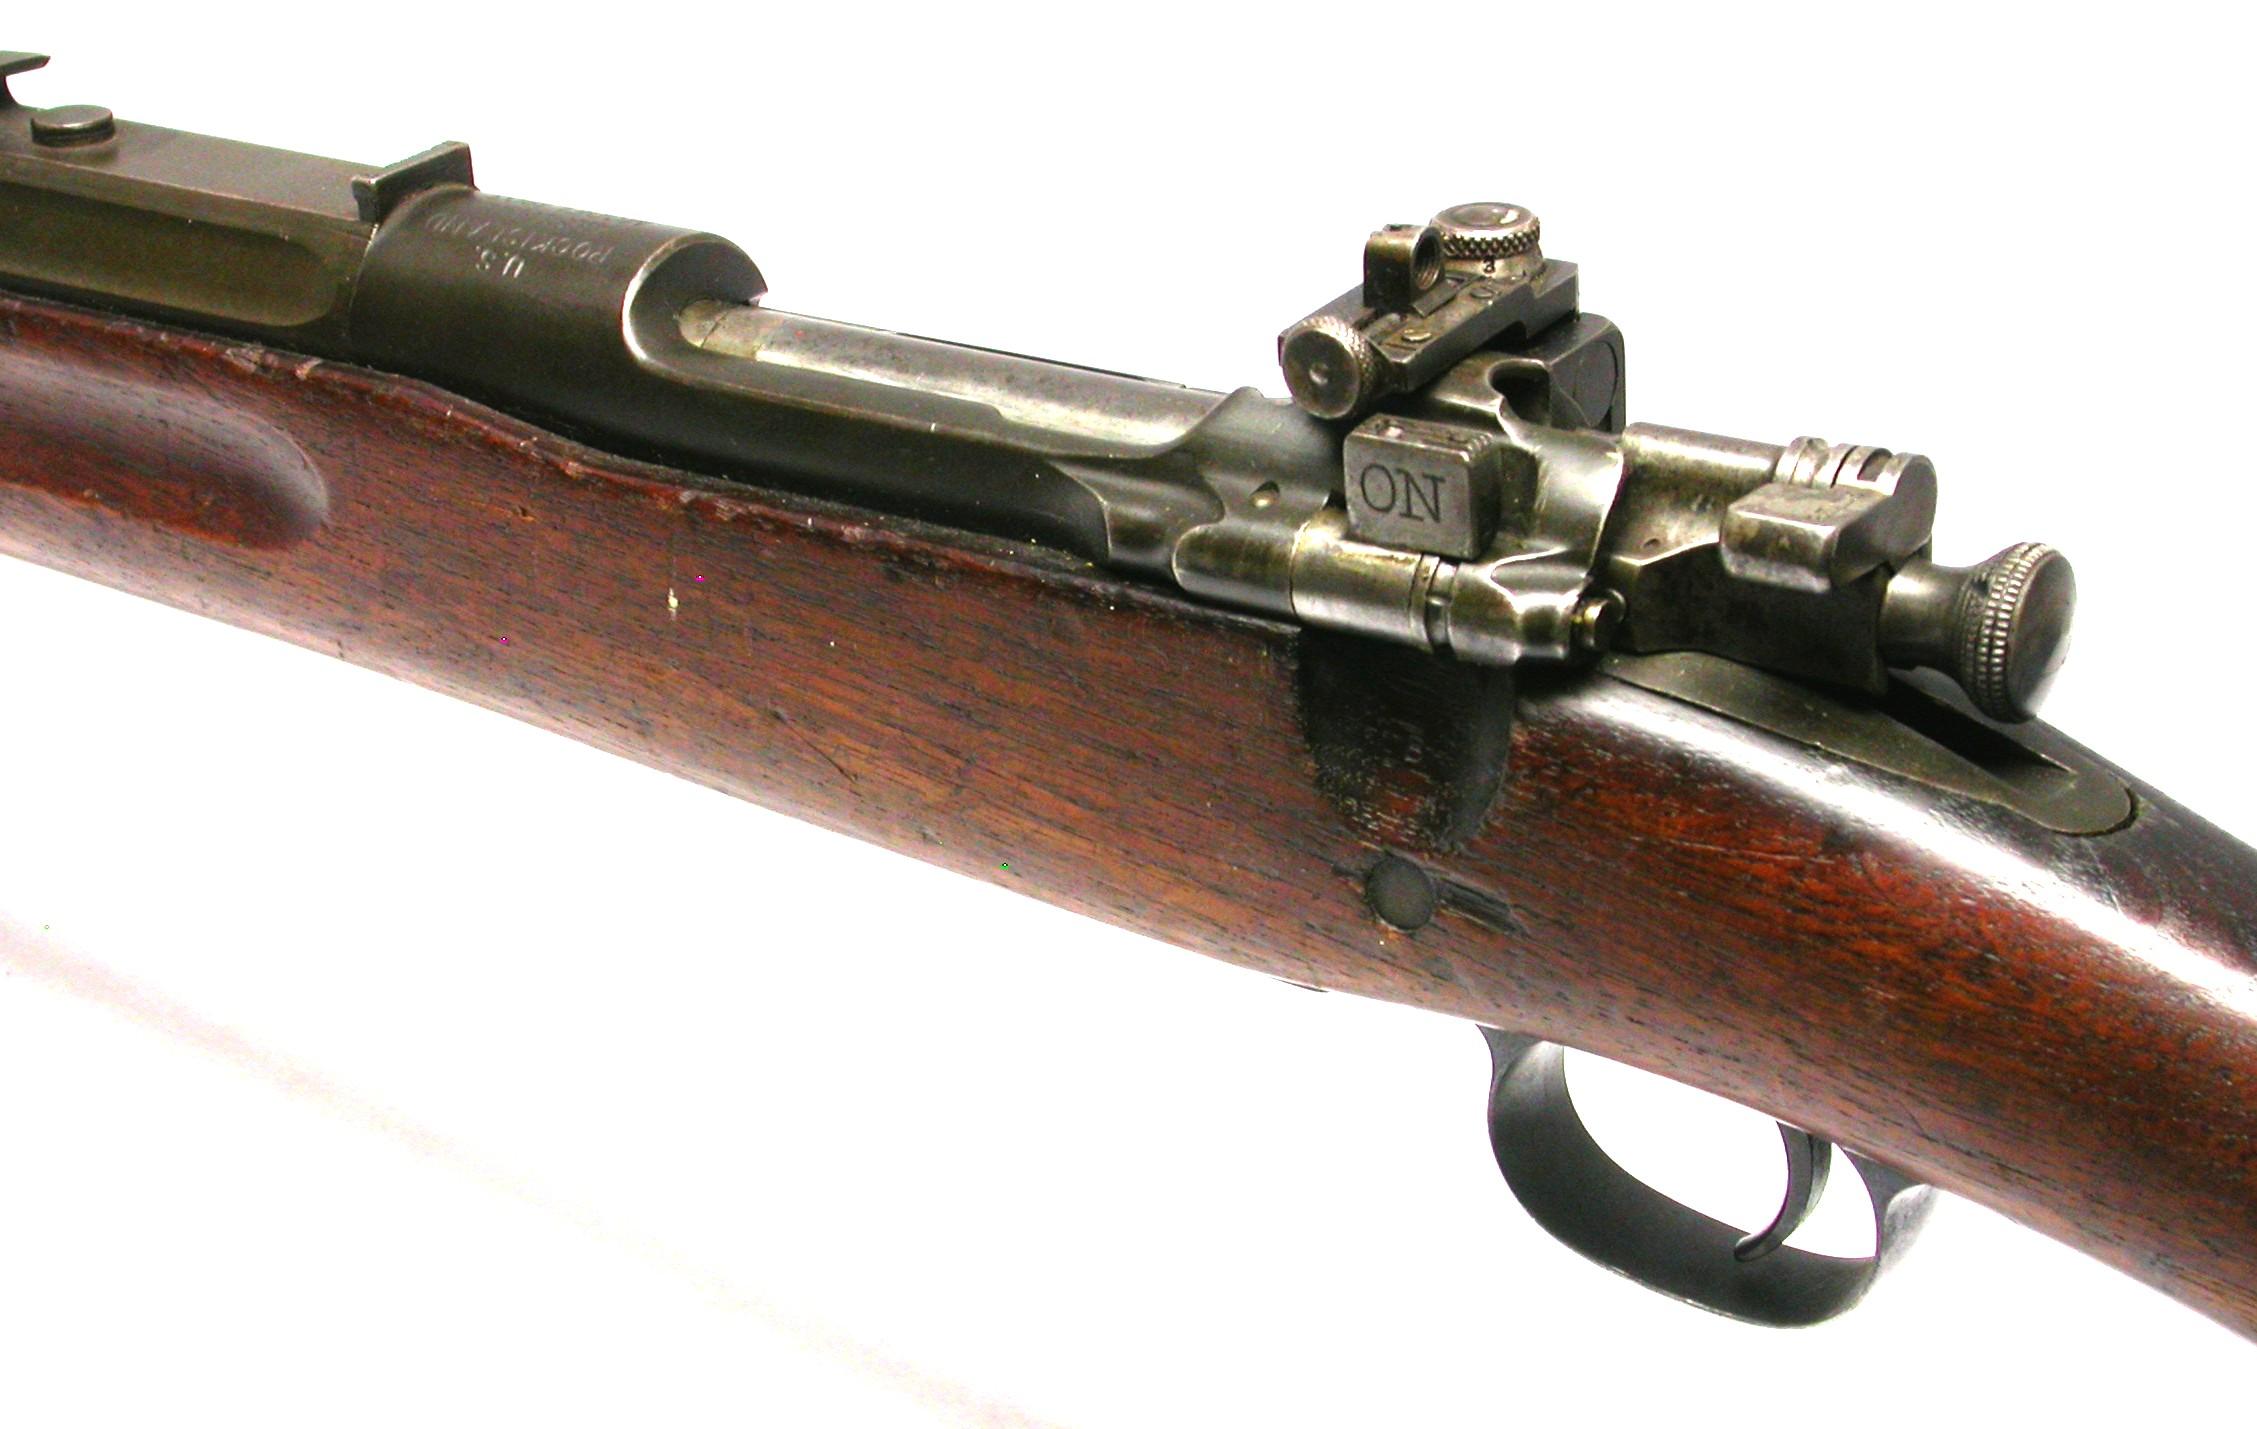 US Military WWI era Rock Island M1903 30-06 Bolt-Action Match Rifle - FFL # 305419 (A)